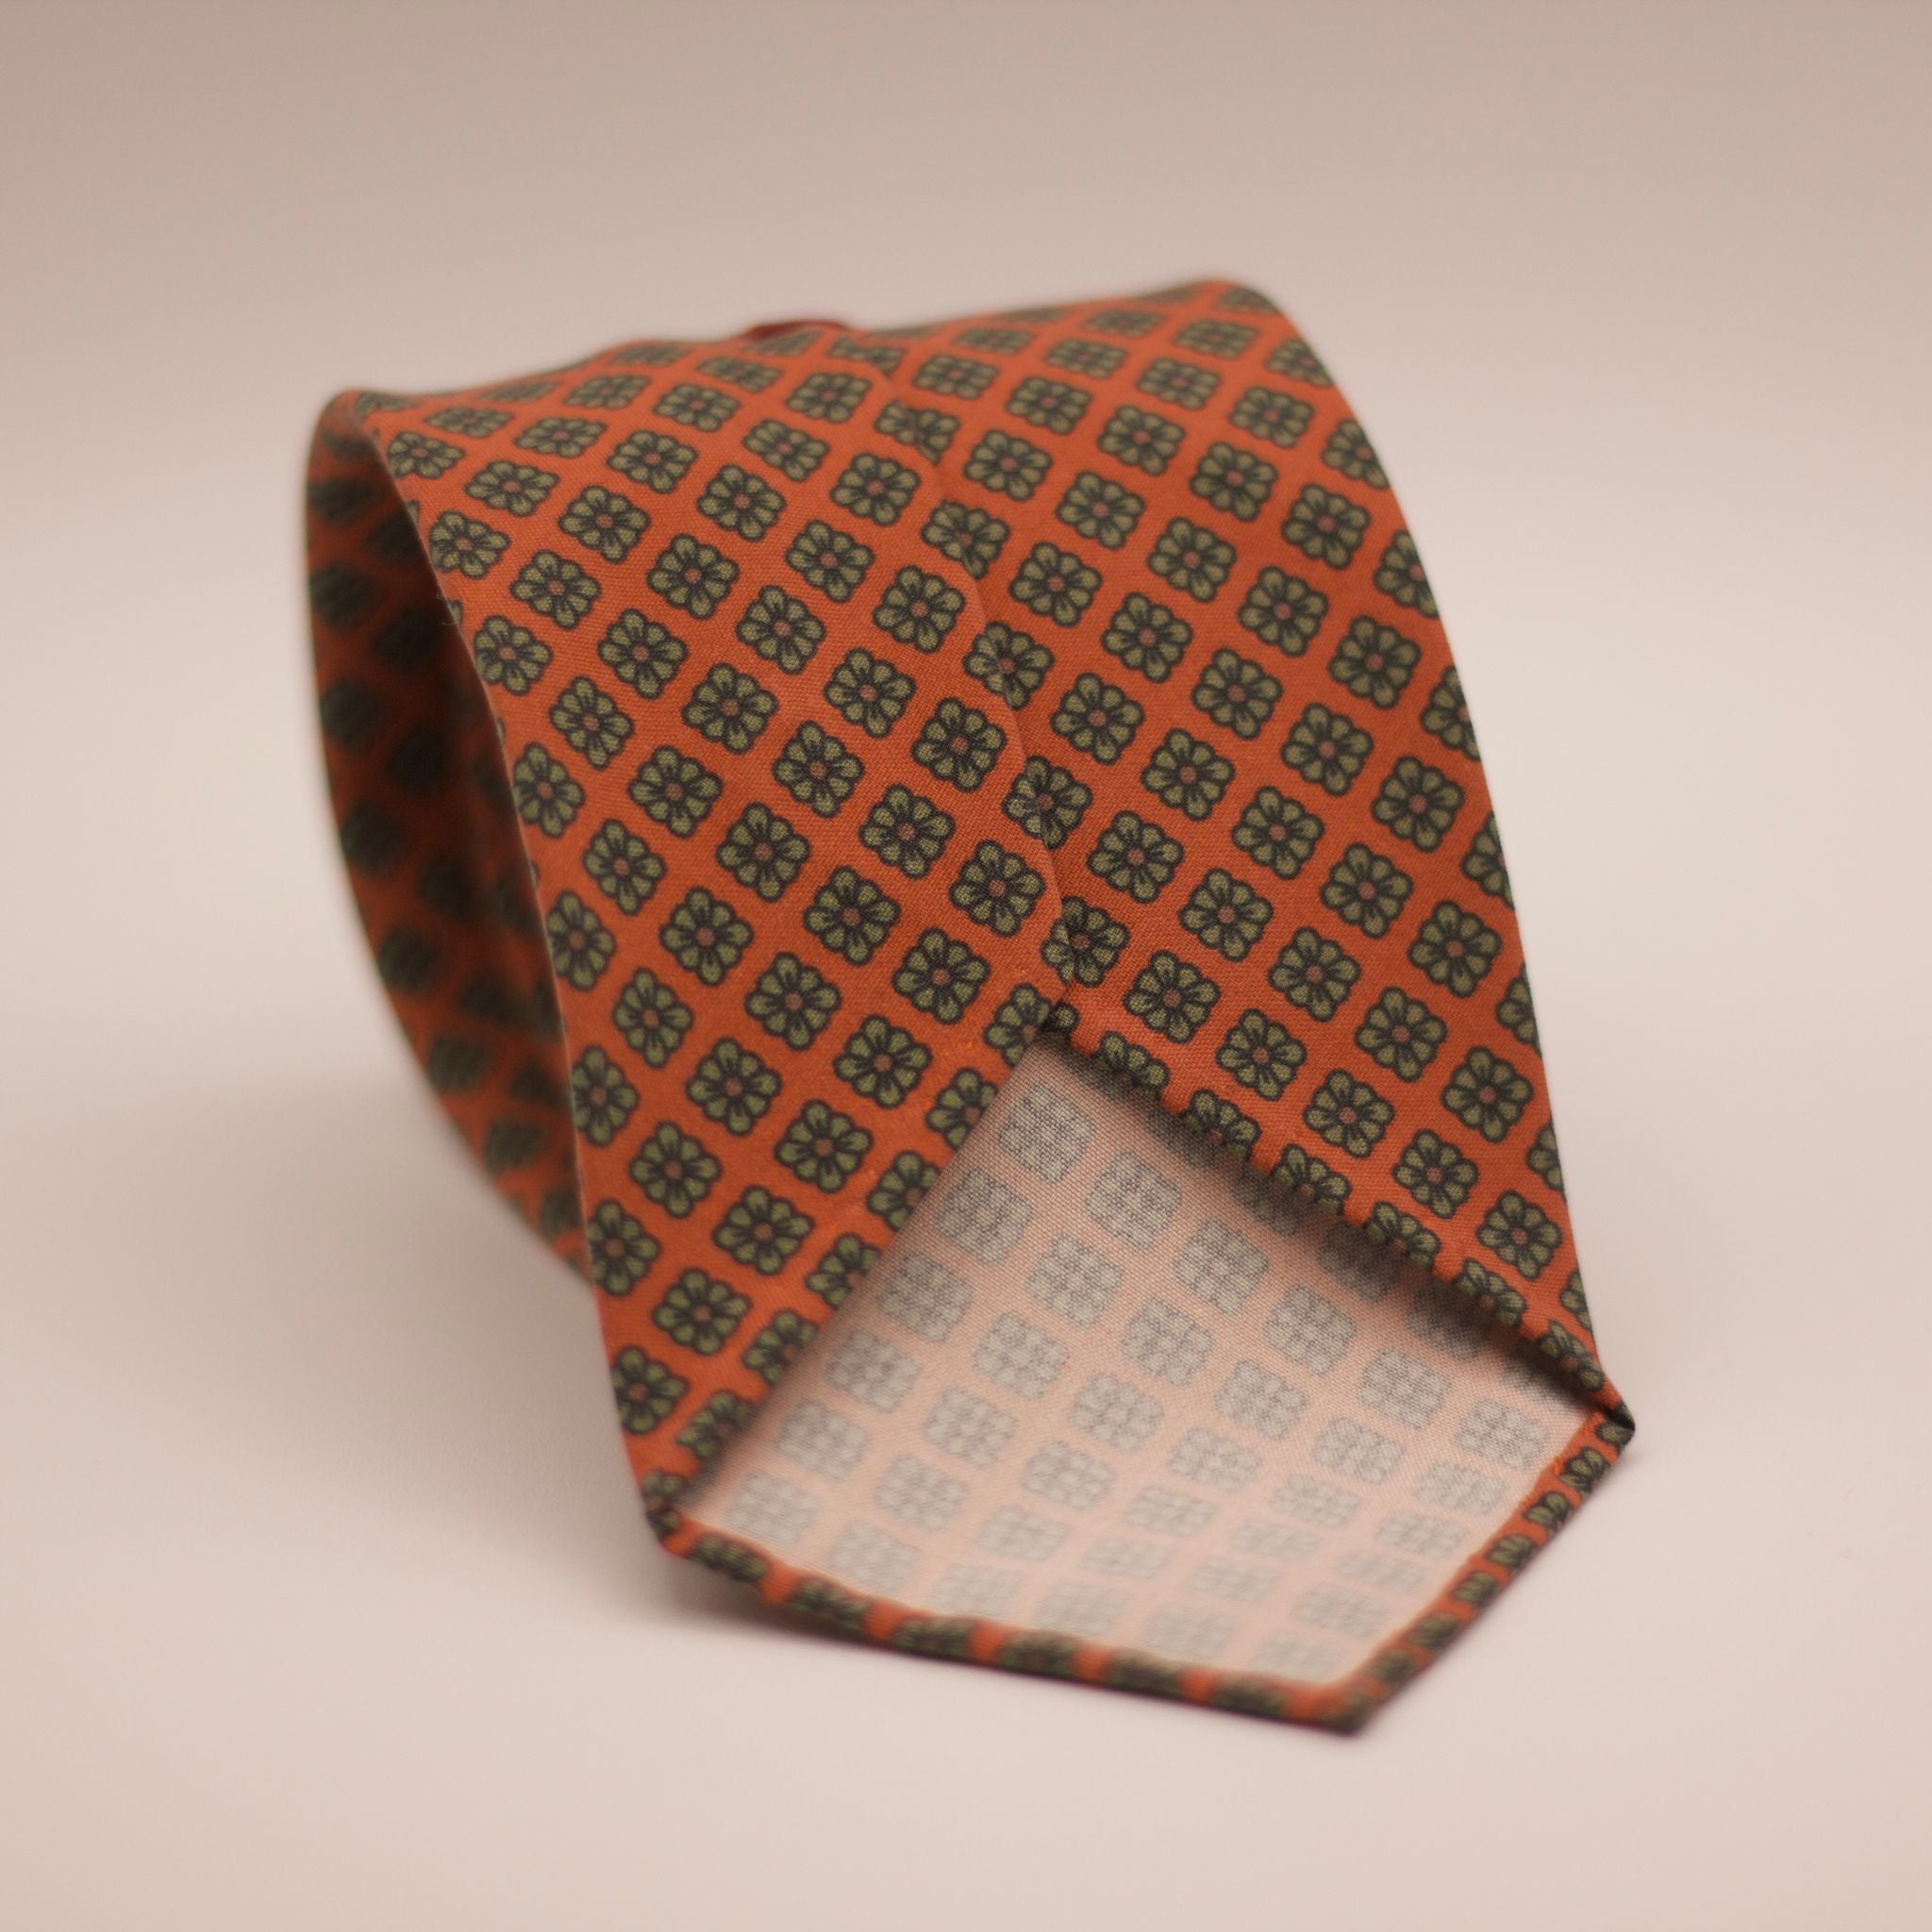 Cruciani & Bella  100% Printed Madder Silk  Italian fabric  Unlined tie Orange, Green floral  motif  8 cm x 150 cm #5946